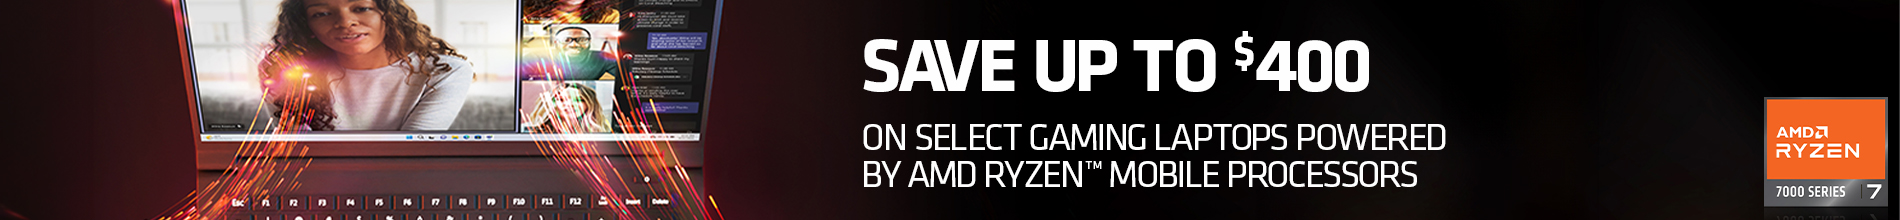 AMD Saveonlaptops 11.21.23banner Btm